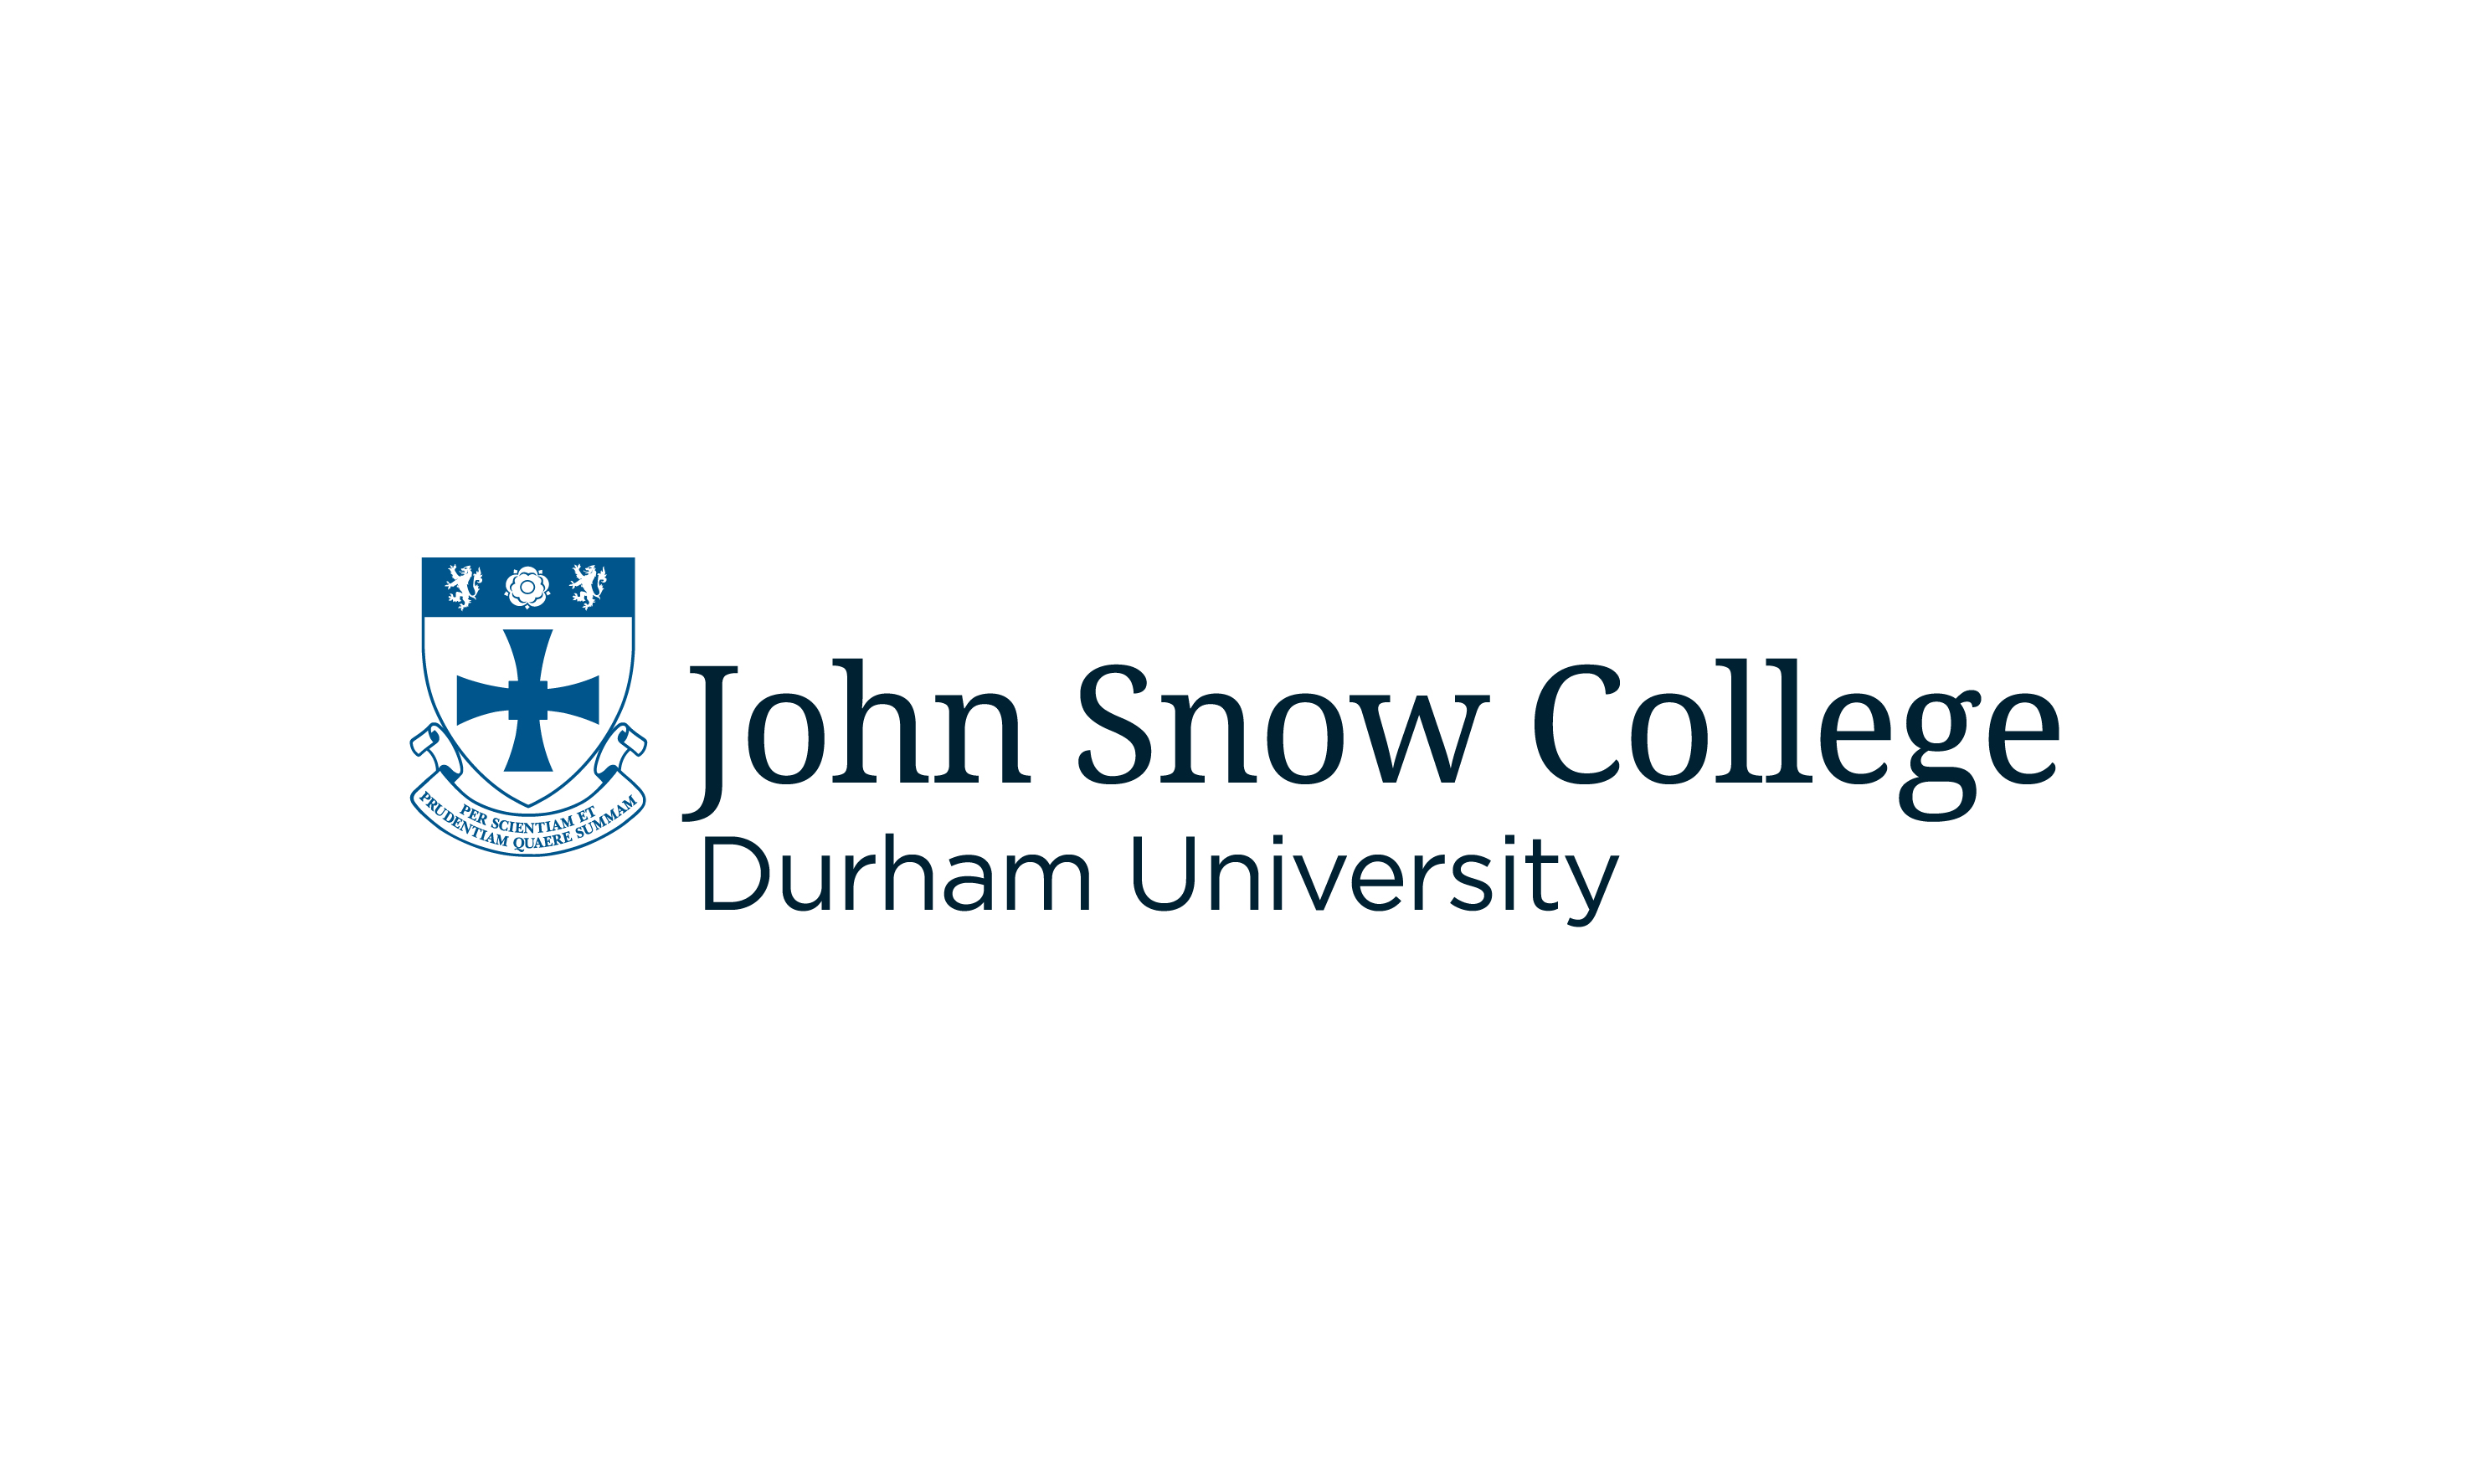 John Snow College gowns - non JCR member